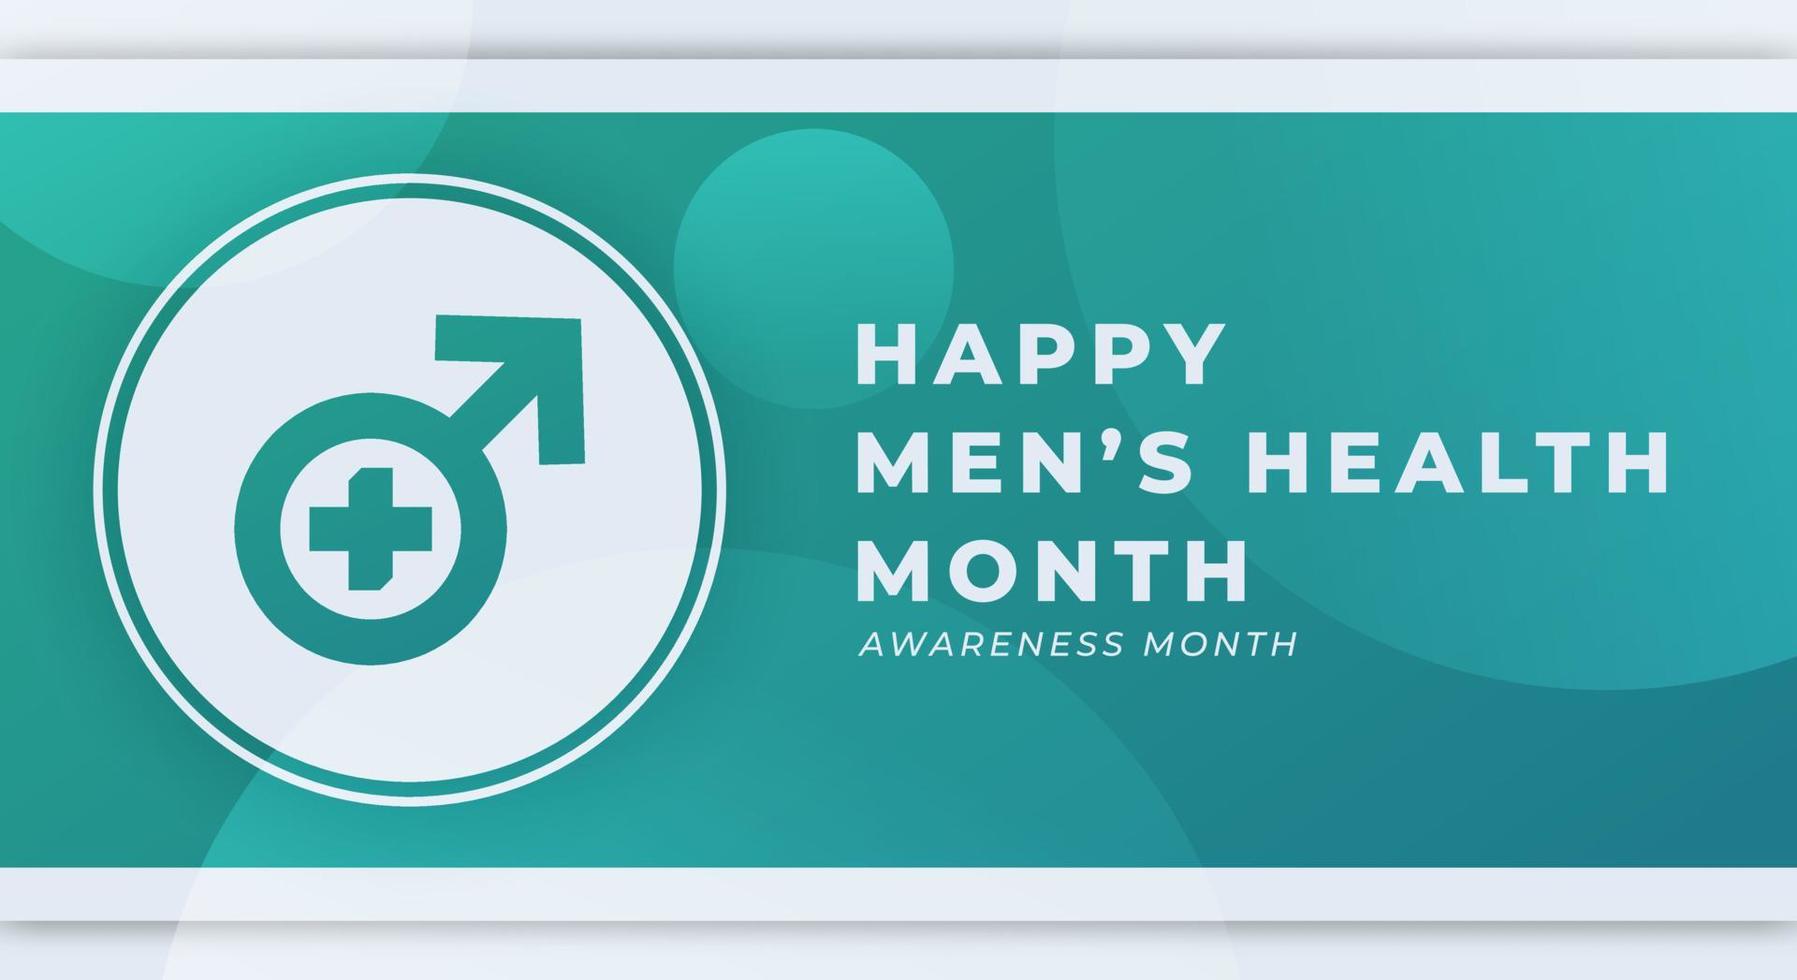 Happy Men's Health Month June Celebration Vector Design Illustration. Template for Background, Poster, Banner, Advertising, Greeting Card or Print Design Element